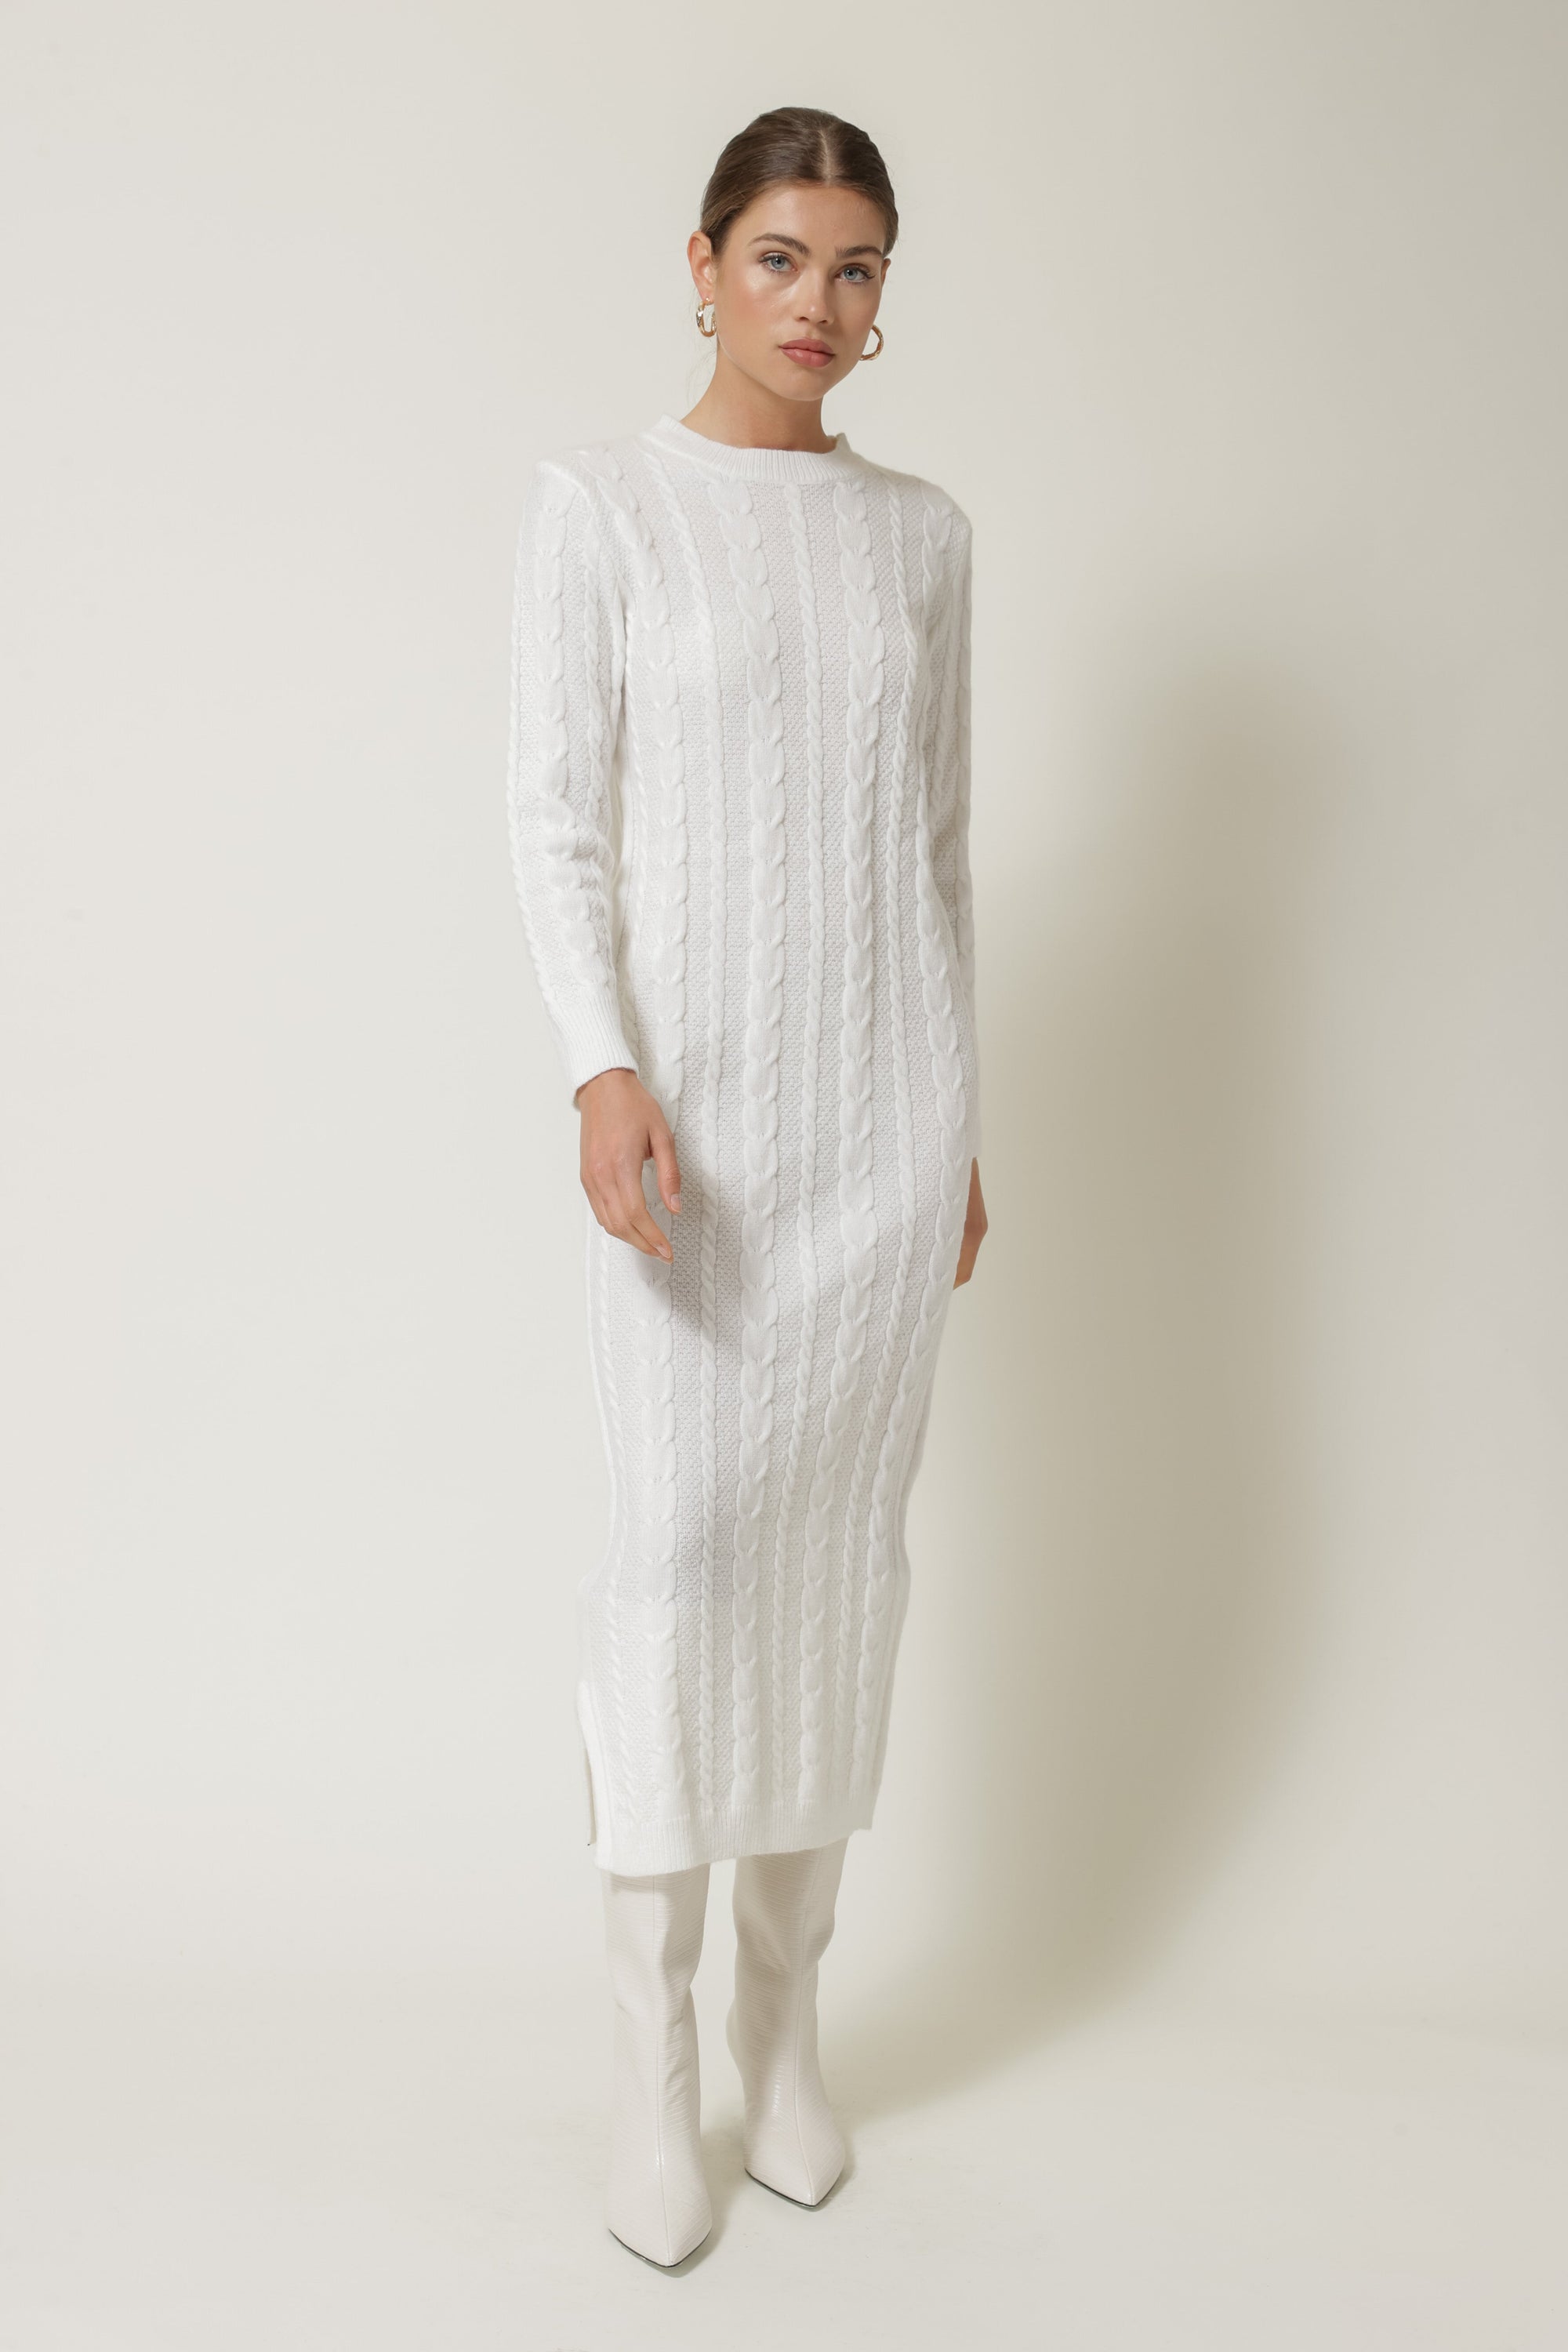 White Sweater Dress with Puff Shoulders - Alyssa Smirnov